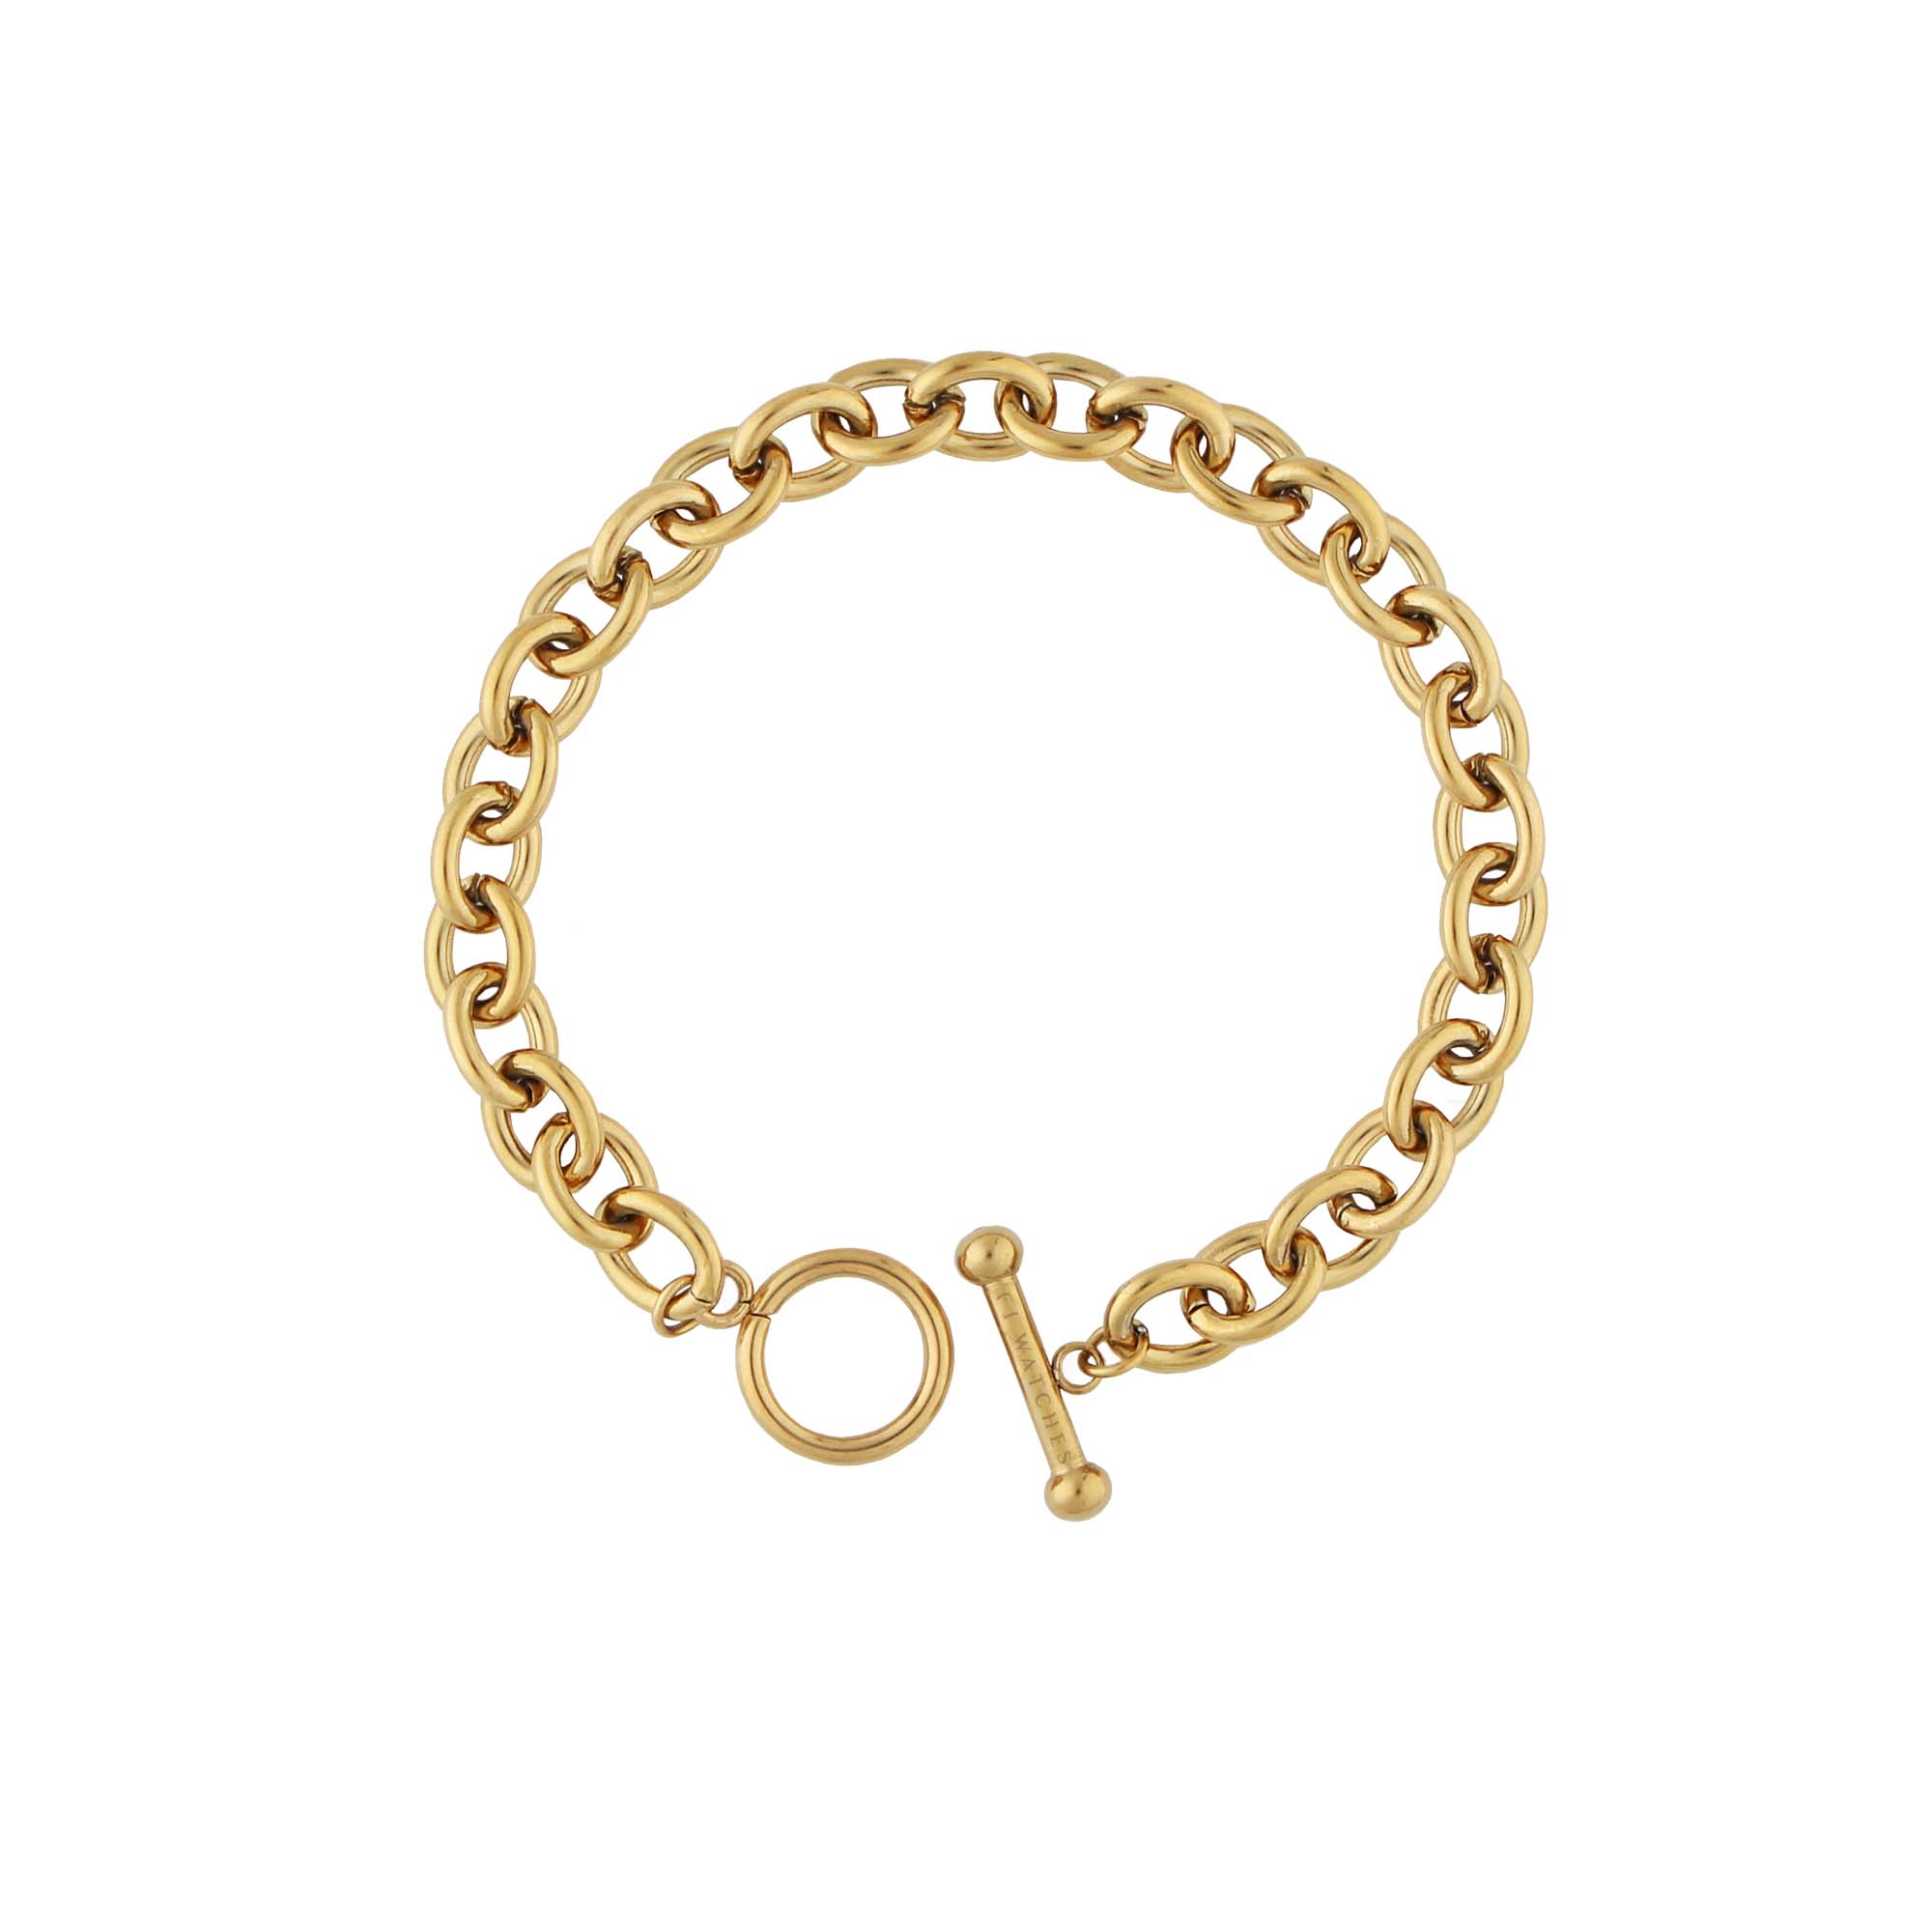 FJ Watches FIVE JWLRY jewel jewelry bijou Vostok cable chain chaine forcat épaisse large bracelet gold or 14k femme women acier inoxydable stainless steel